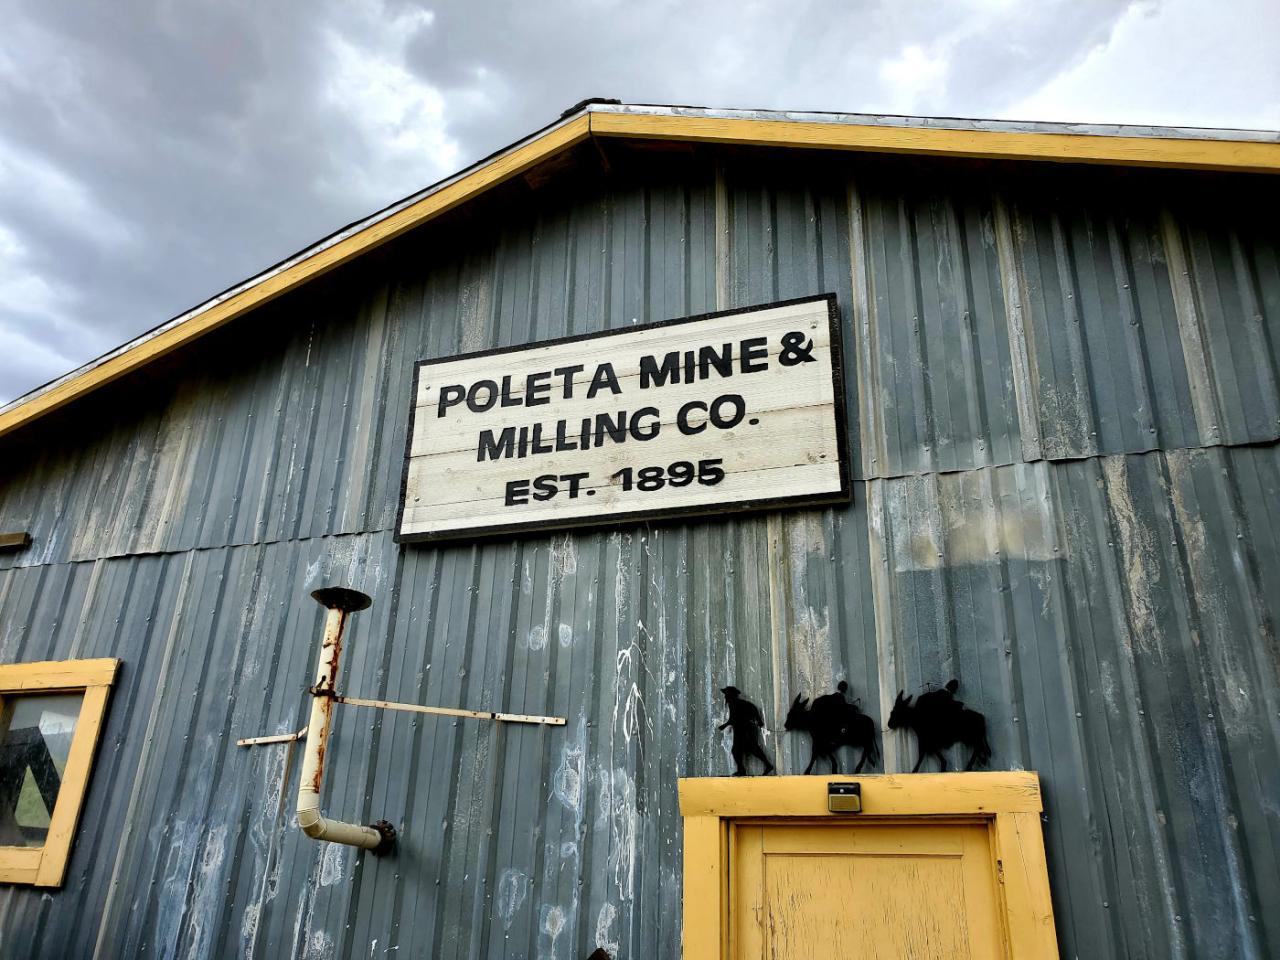 "poleta mine and milling co. est 1895"